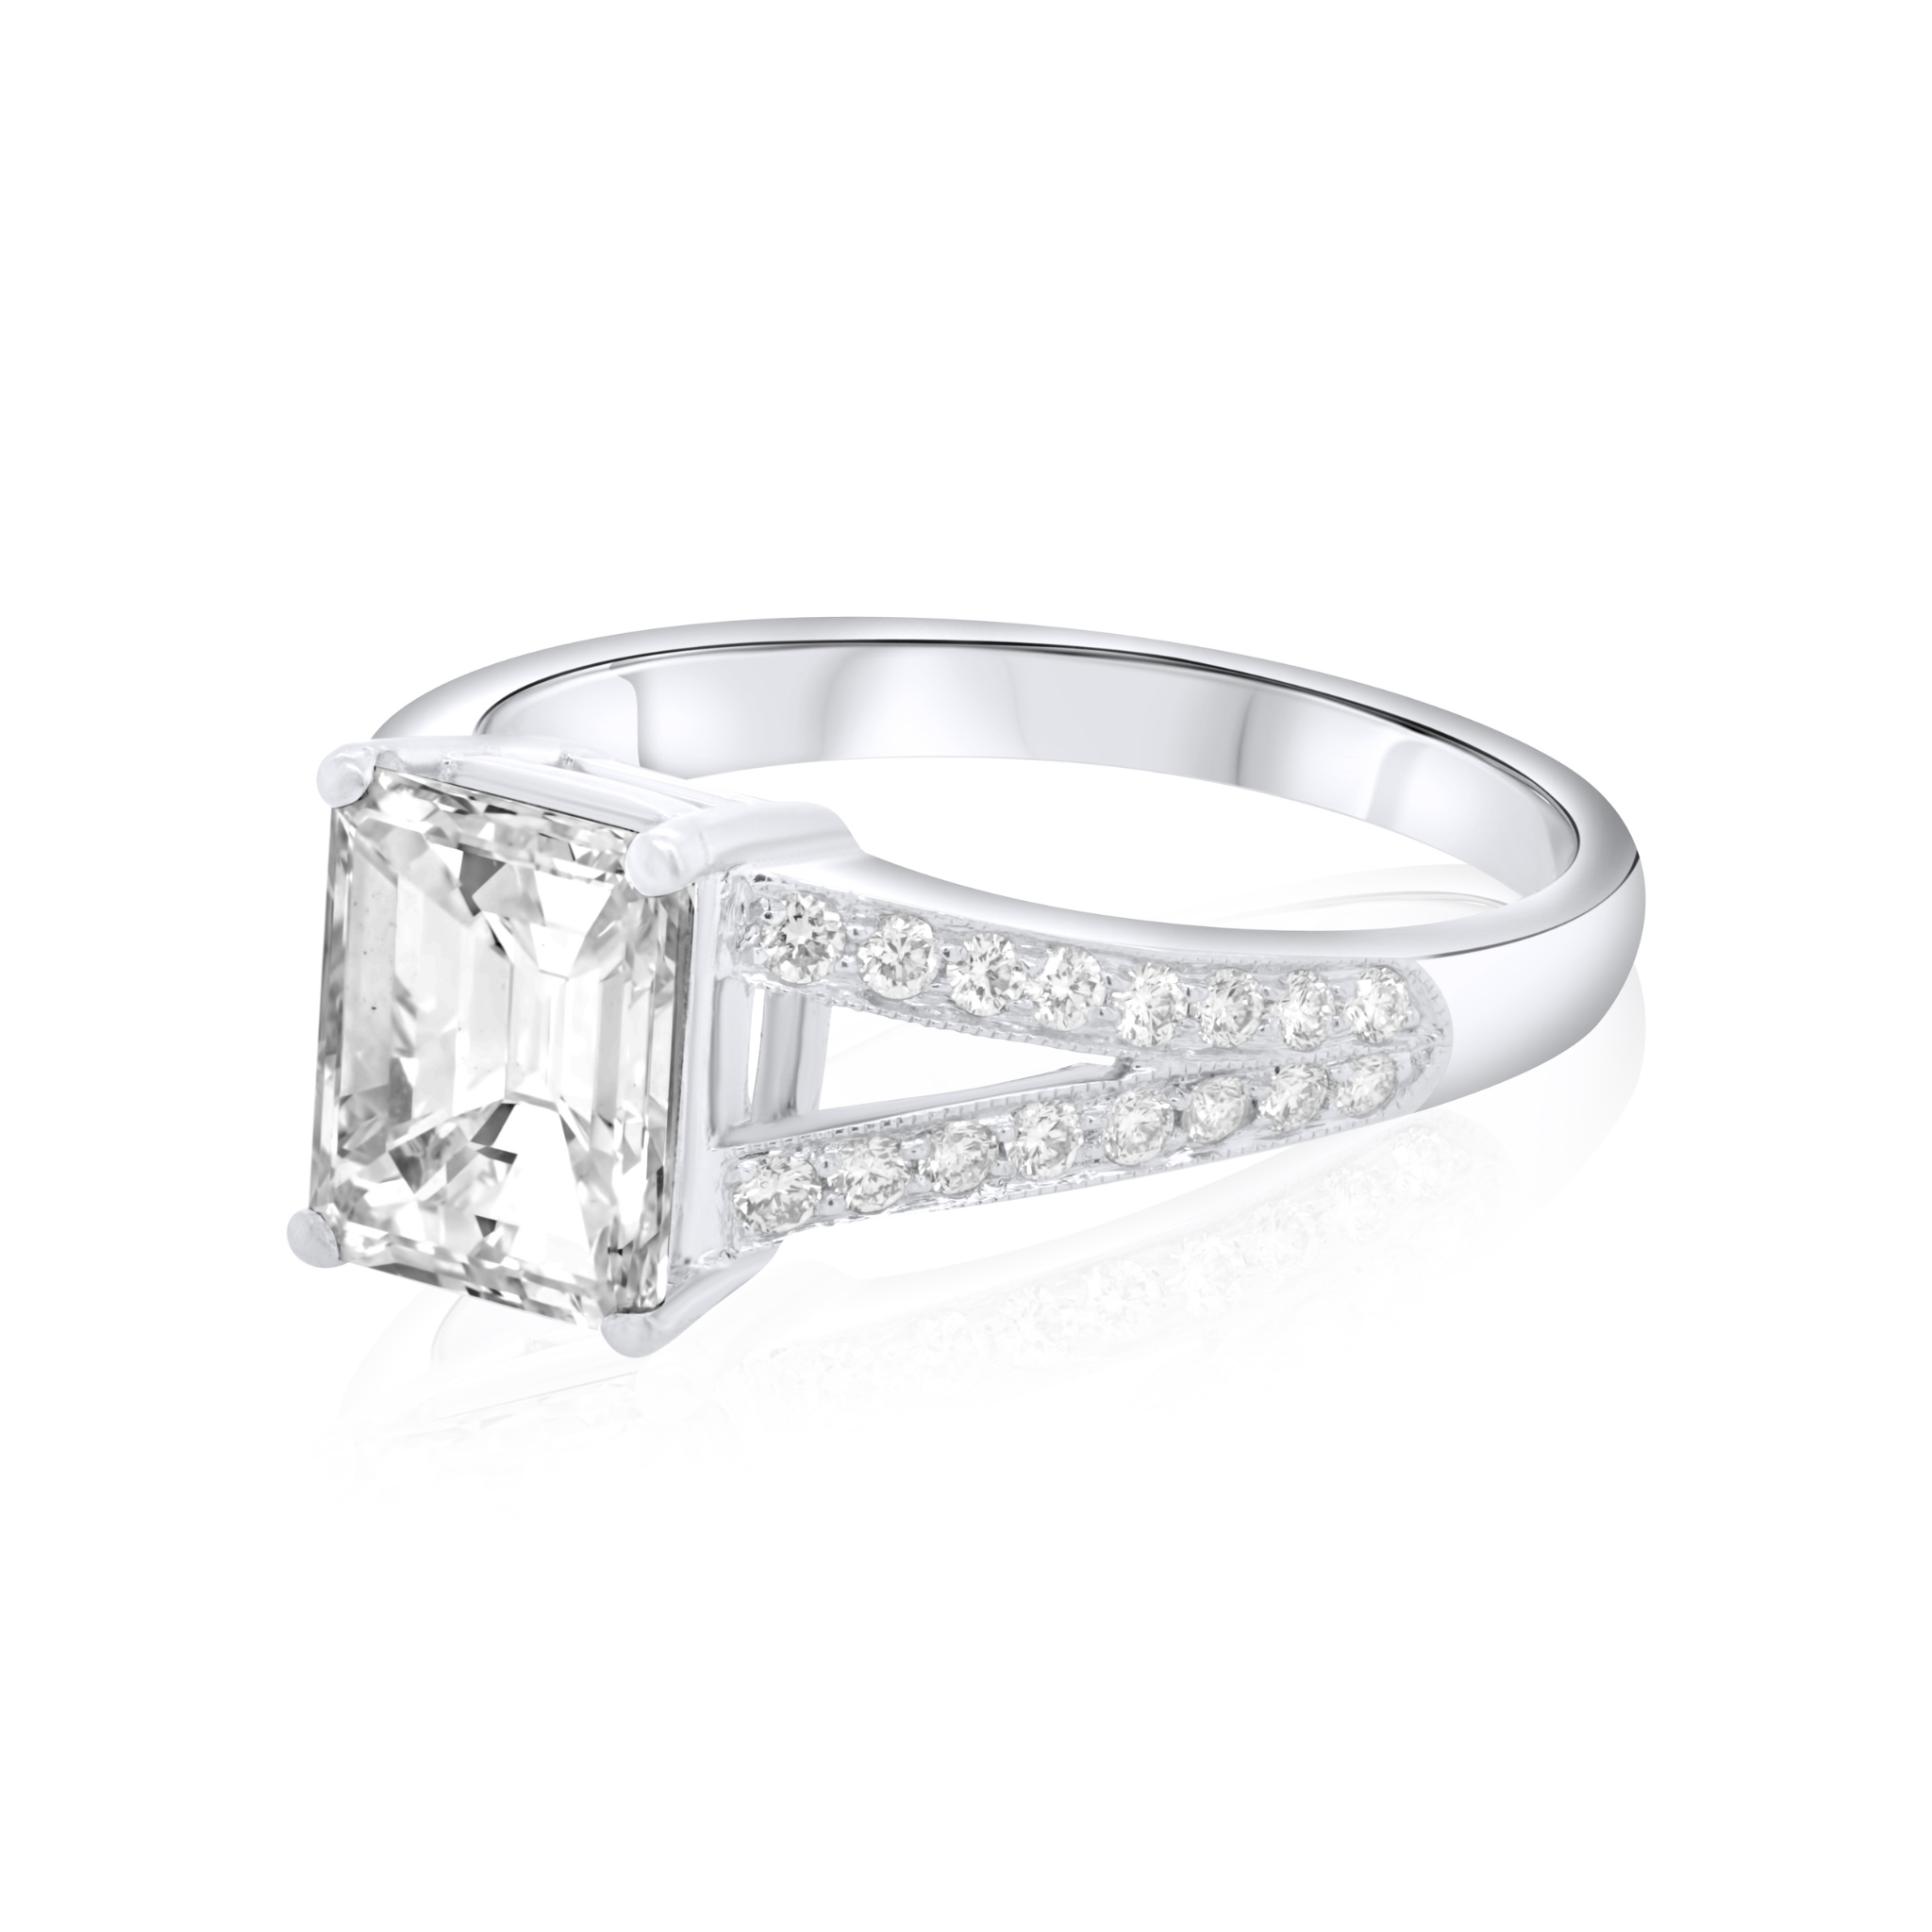 2ct Emerald Cut Split Shank Diamond Ring.jpg